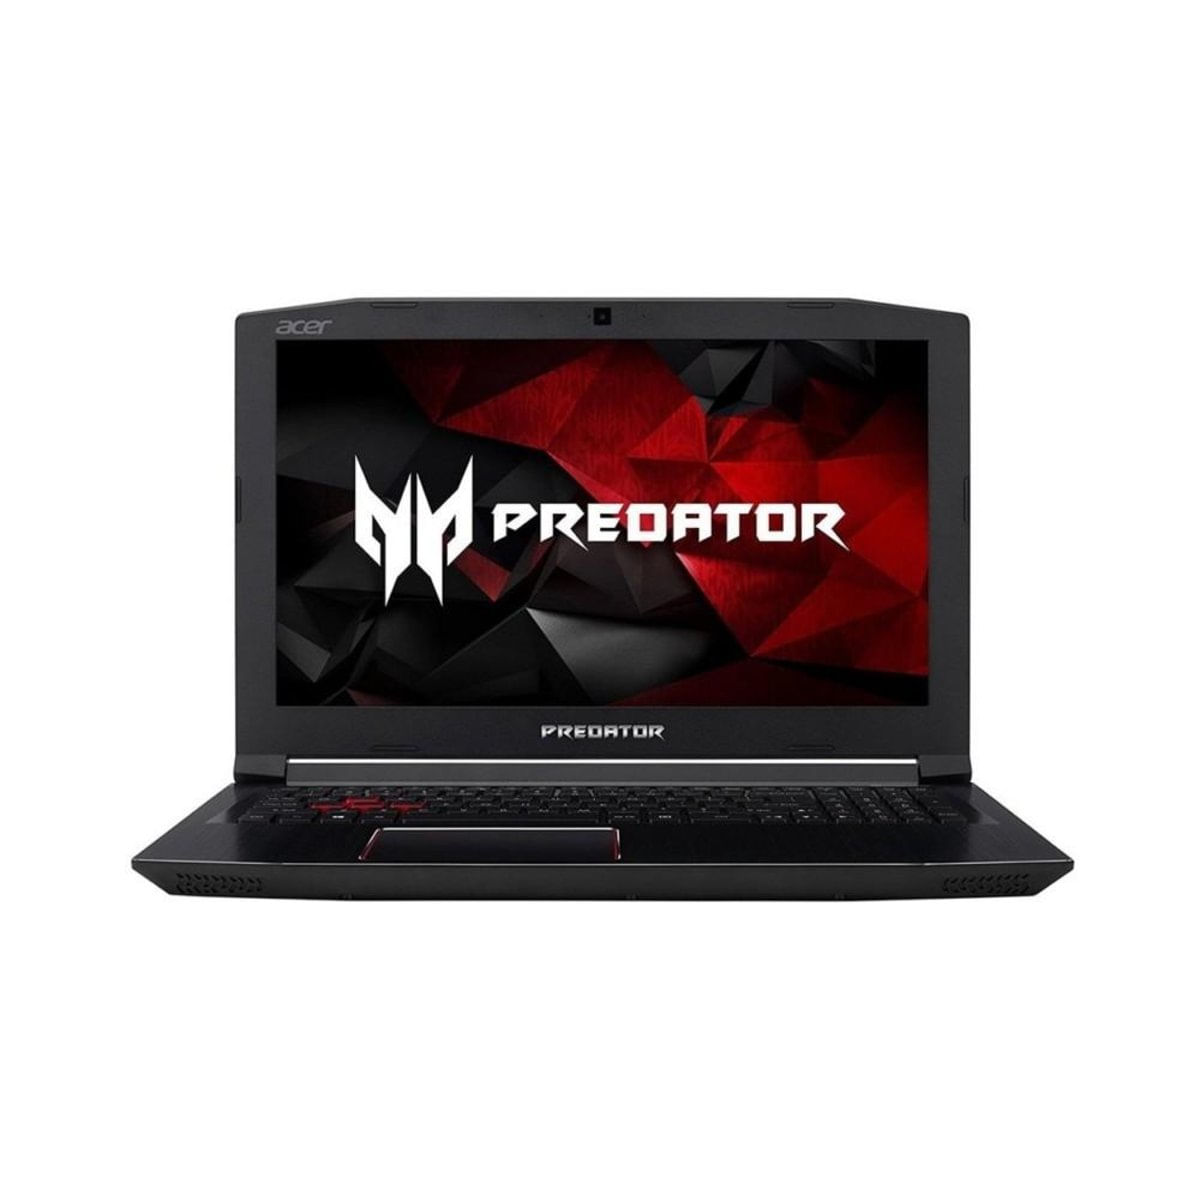 Notebookgamer - Acer G3-571-77qk I7-7700hq 2.80ghz 16gb 256gb Ssd Geforce Gtx 1060 Windows 10 Professional Predator 15,6" Polegadas